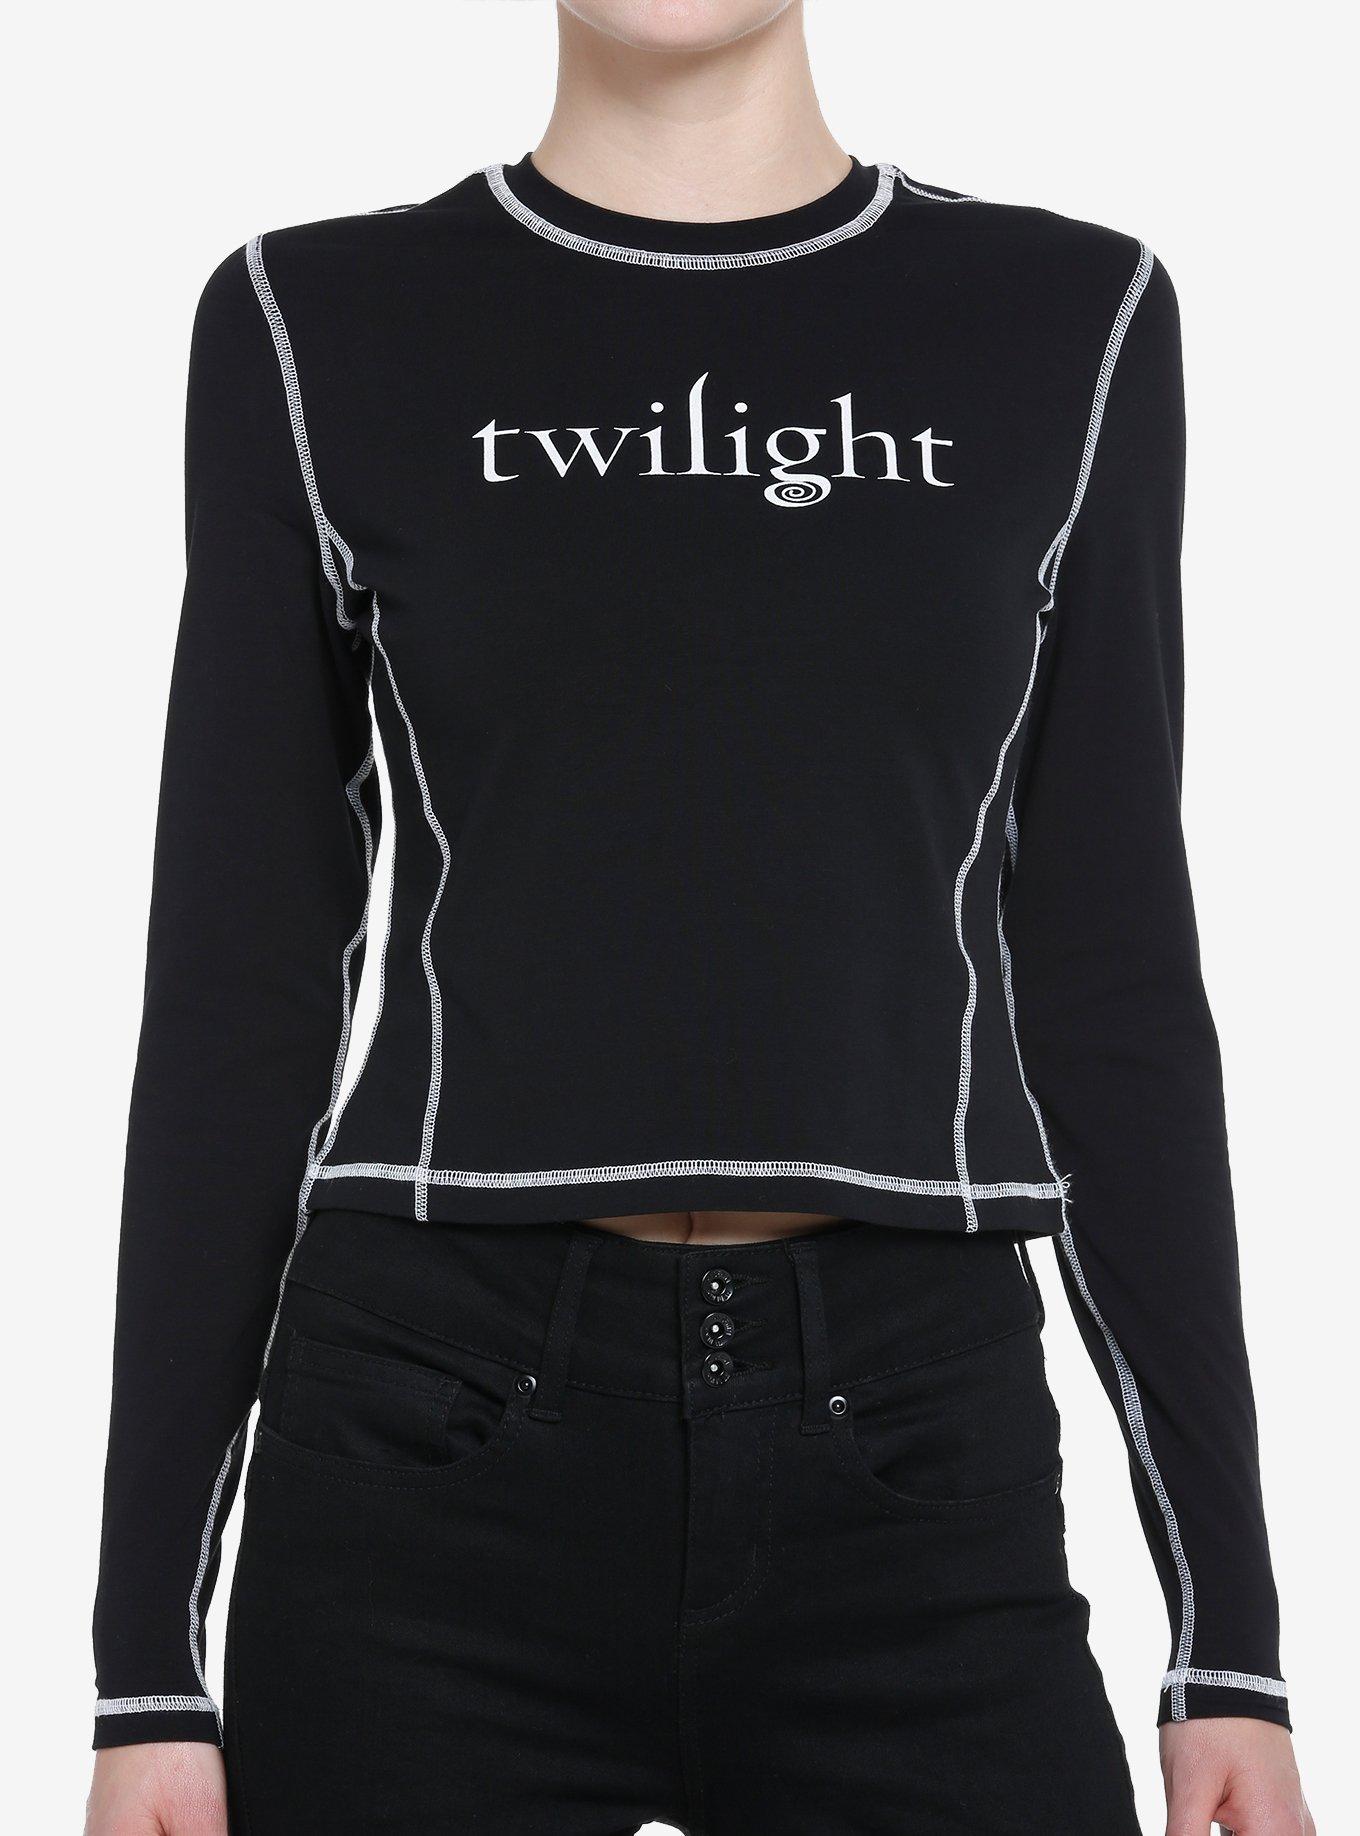 Twilight Logo Contrast Stitch Girls Baby Long-Sleeve T-Shirt | Hot Topic